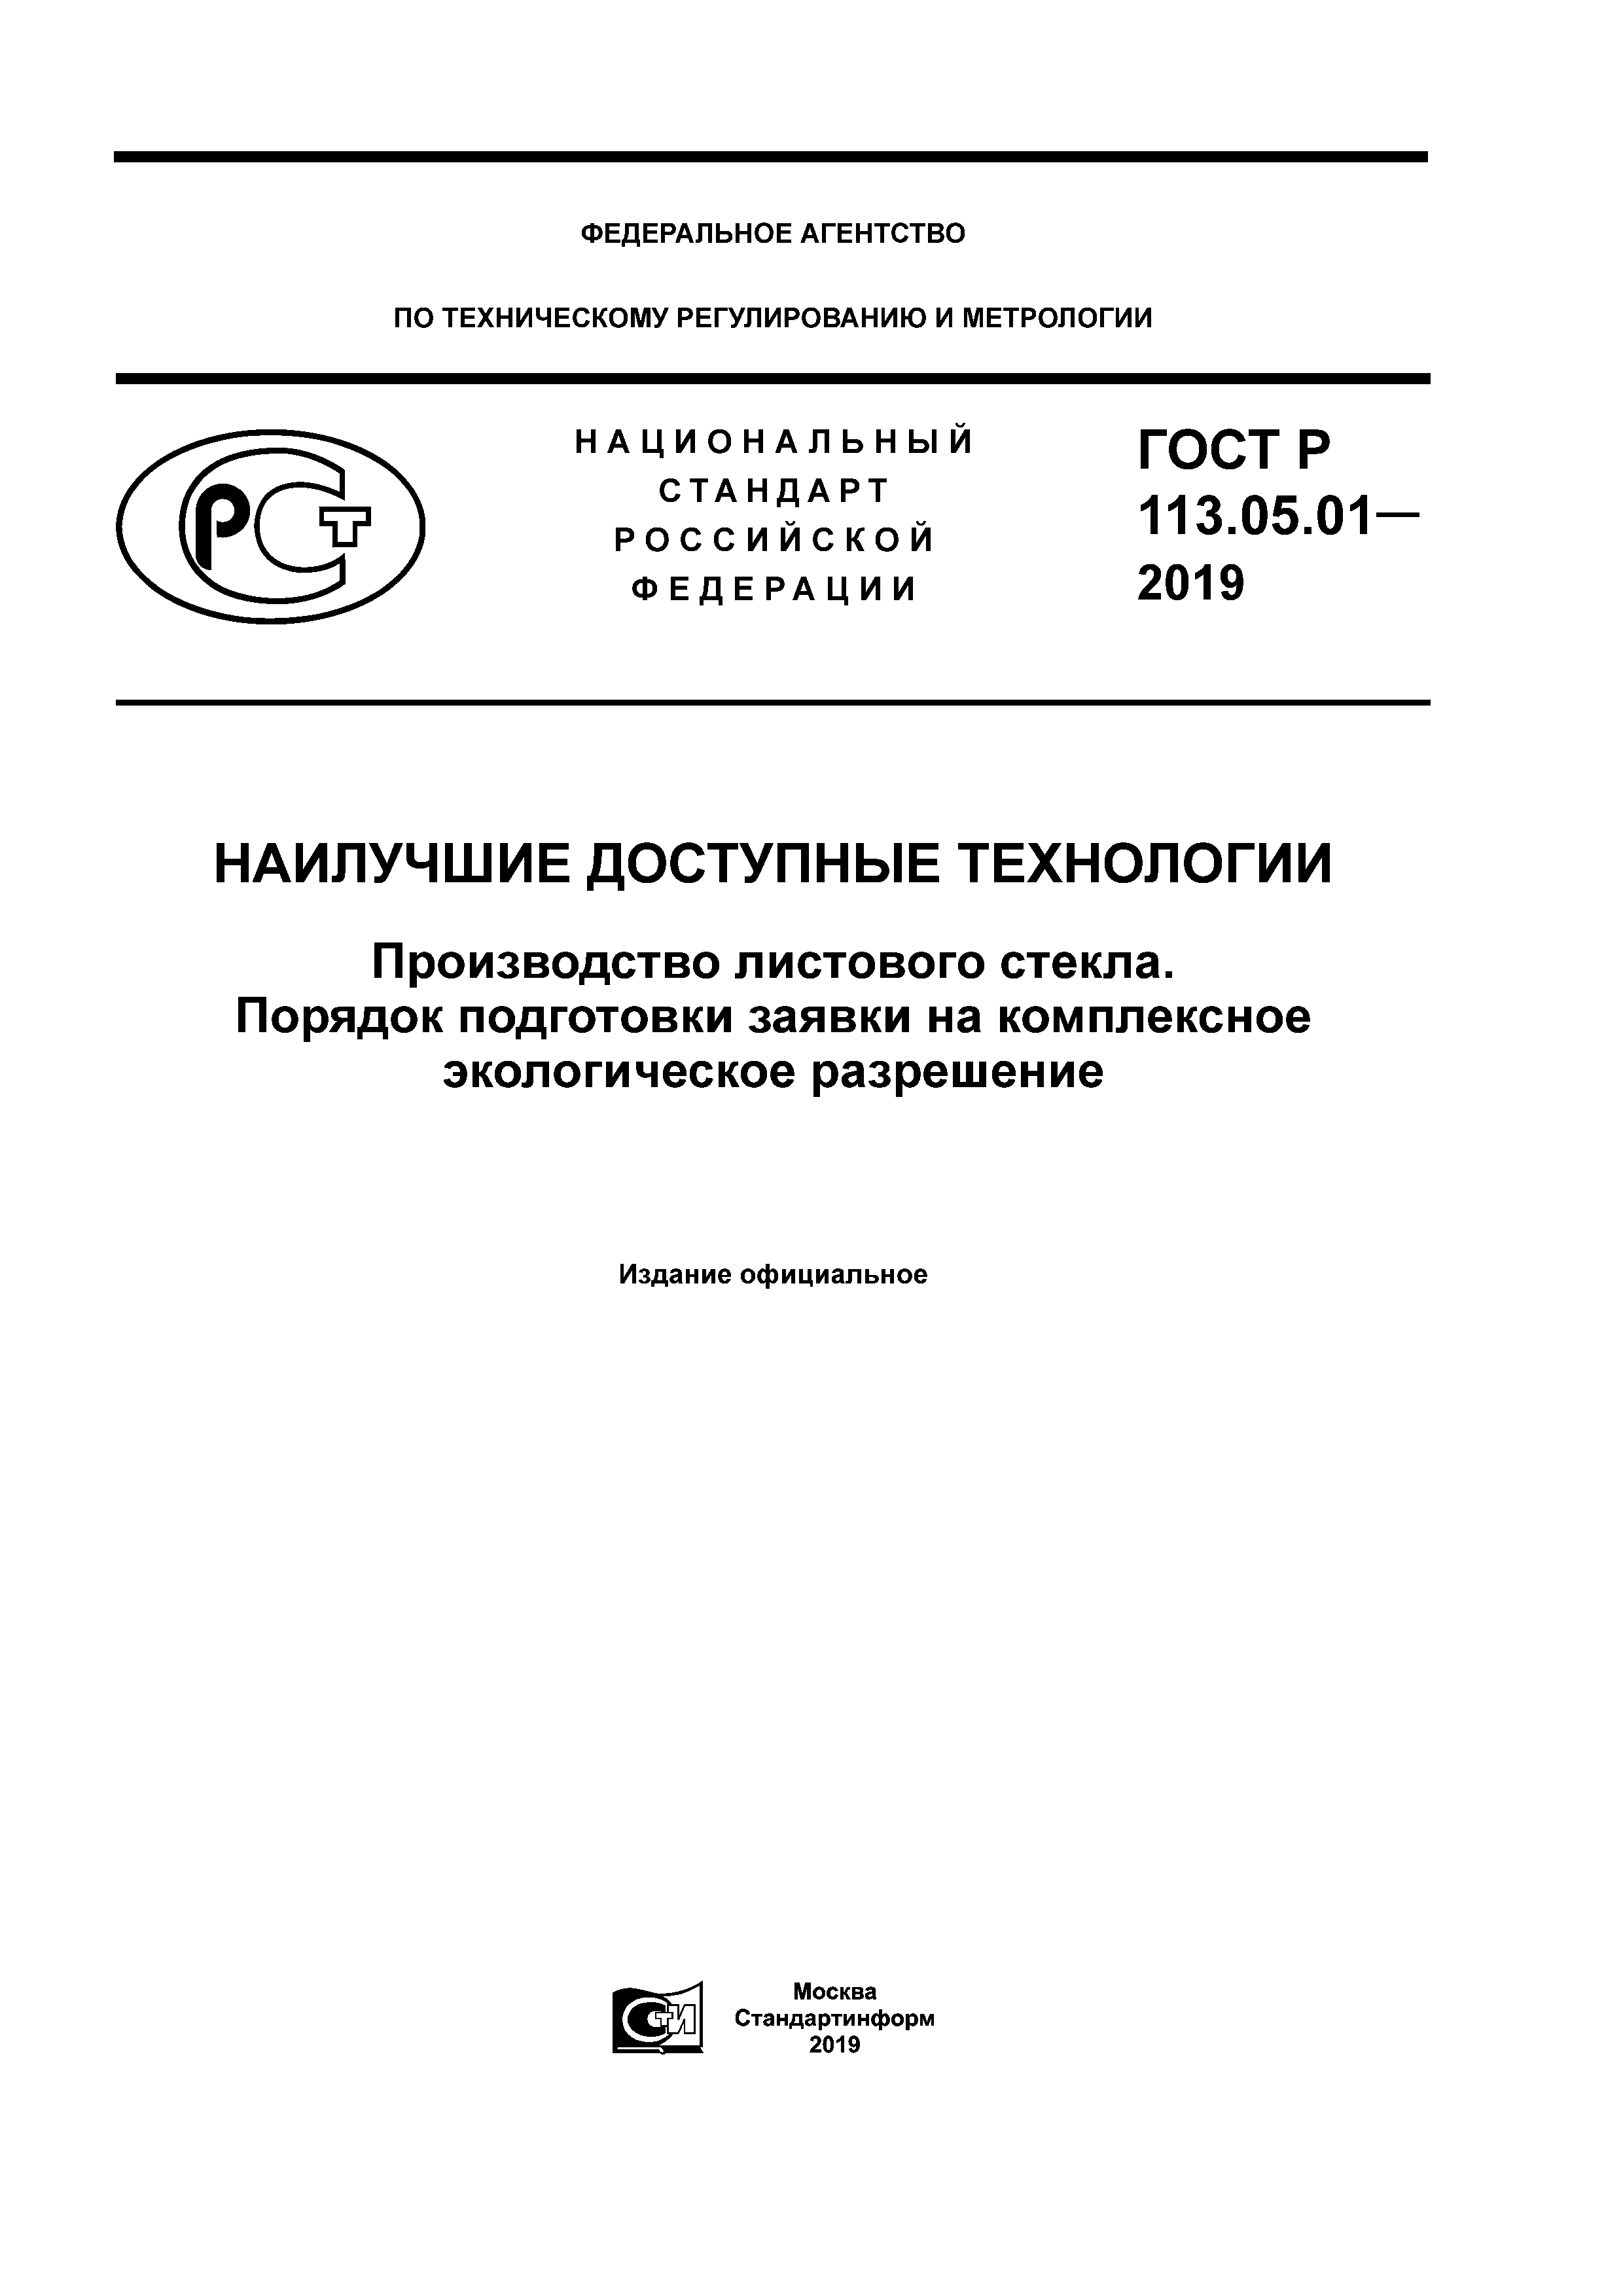 ГОСТ Р 113.05.01-2019